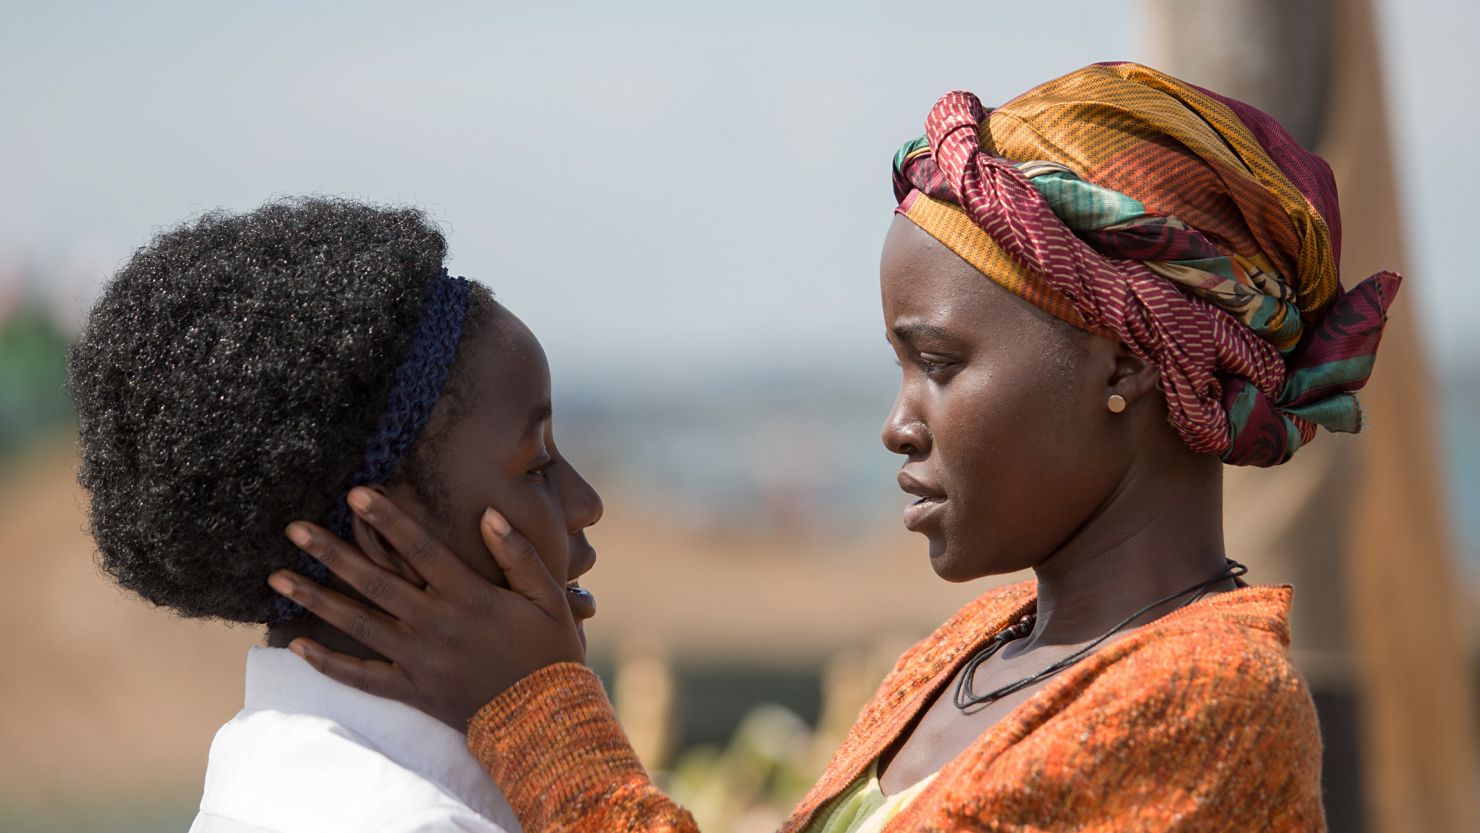 Lupita Nyong'o and Madina Nalwanga in "Queen of Katwe", Disney's film about the life of Phiona Mutesi.